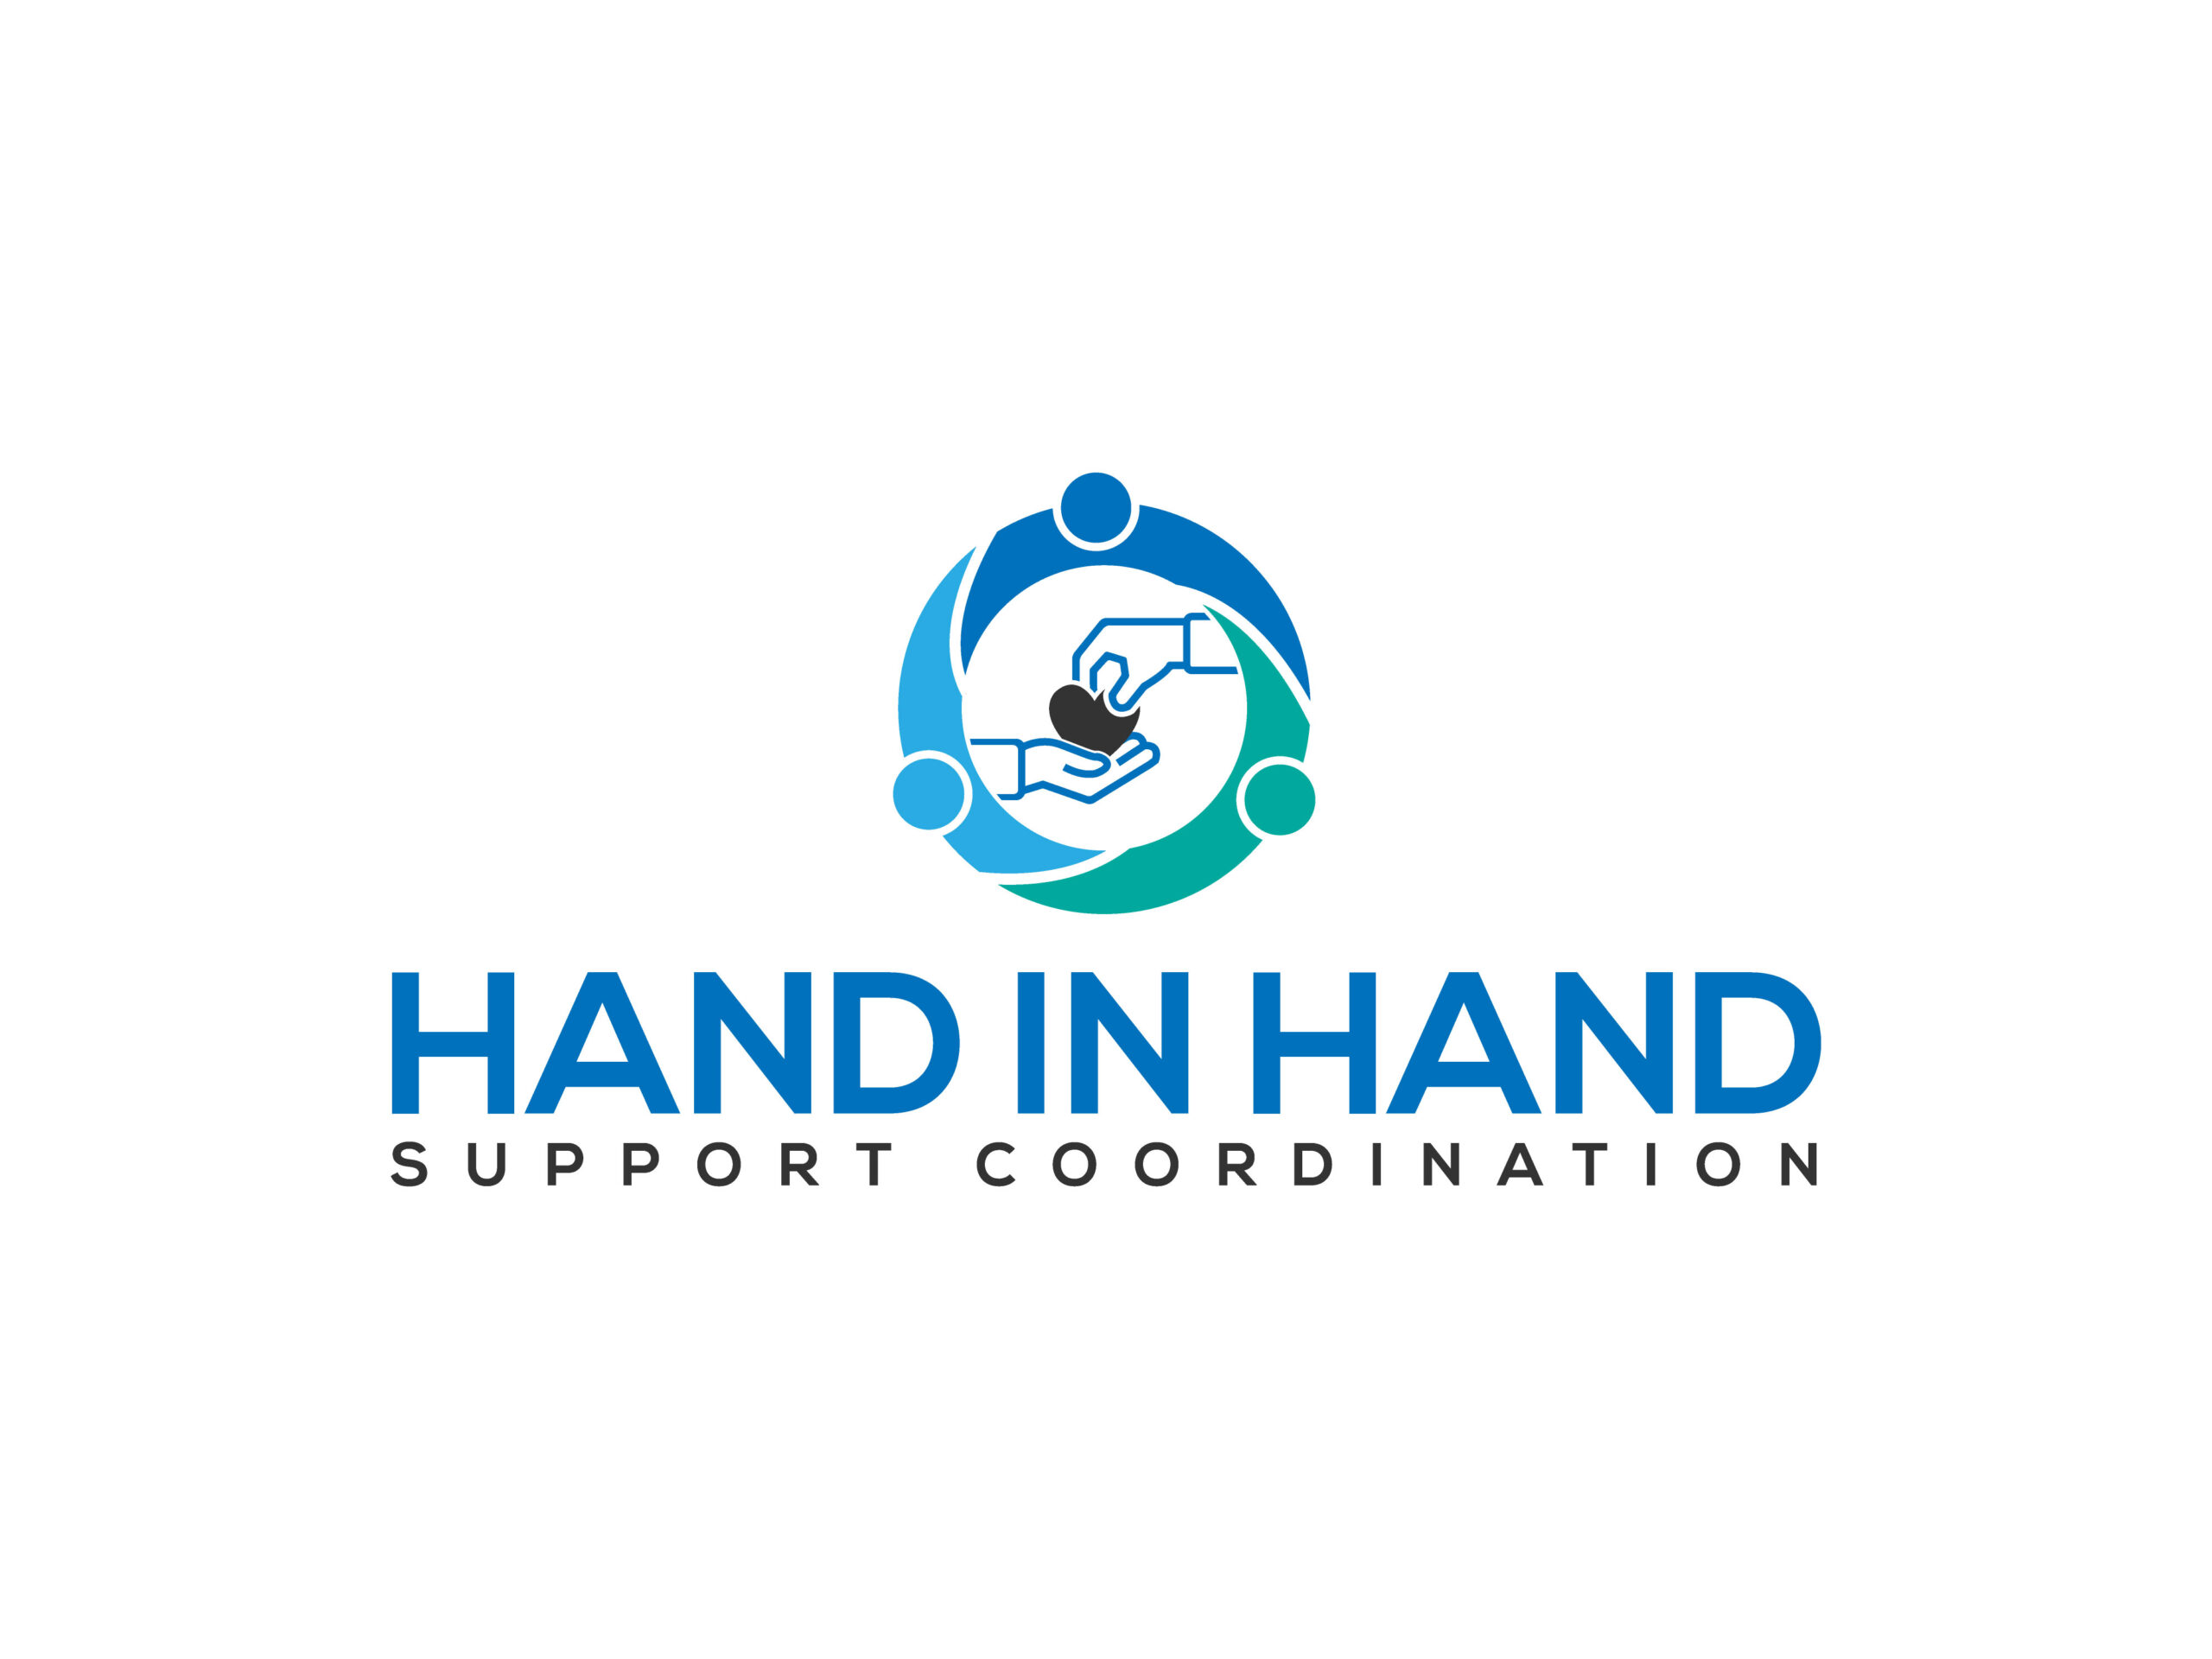 Hand in hand logo